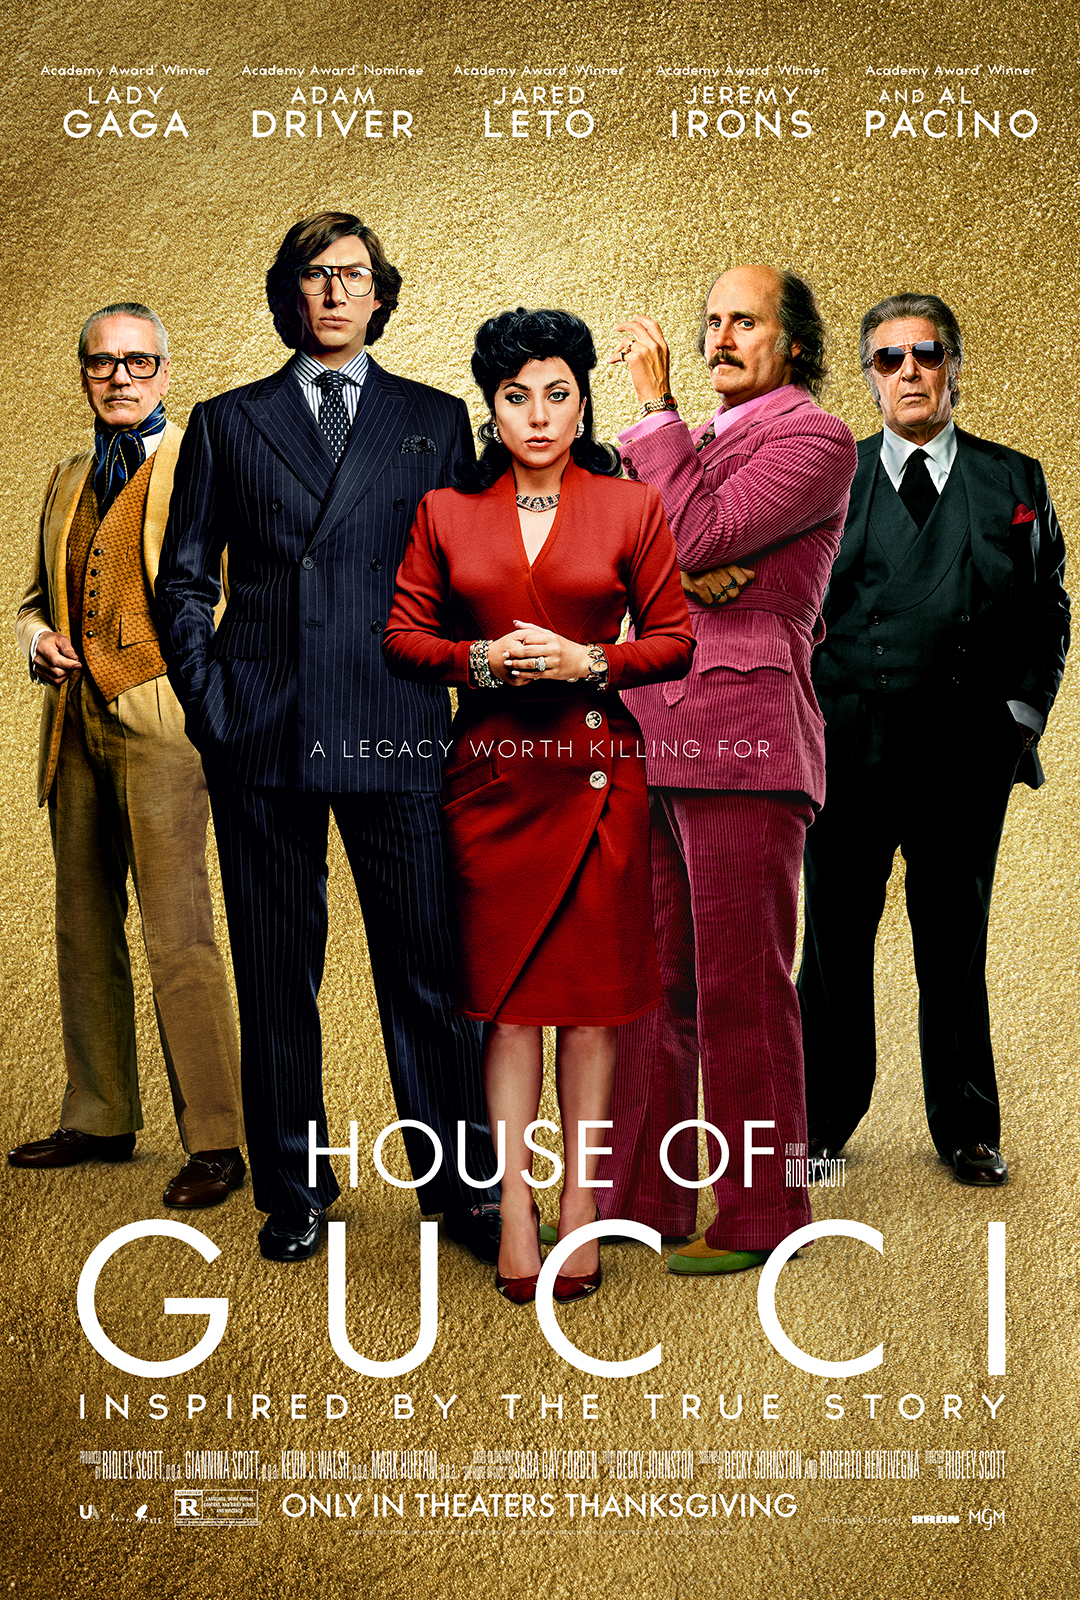 Stiahni si Filmy s titulkama Klan Gucci / House of Gucci (2021)[WebRip][2160p] = CSFD 74%